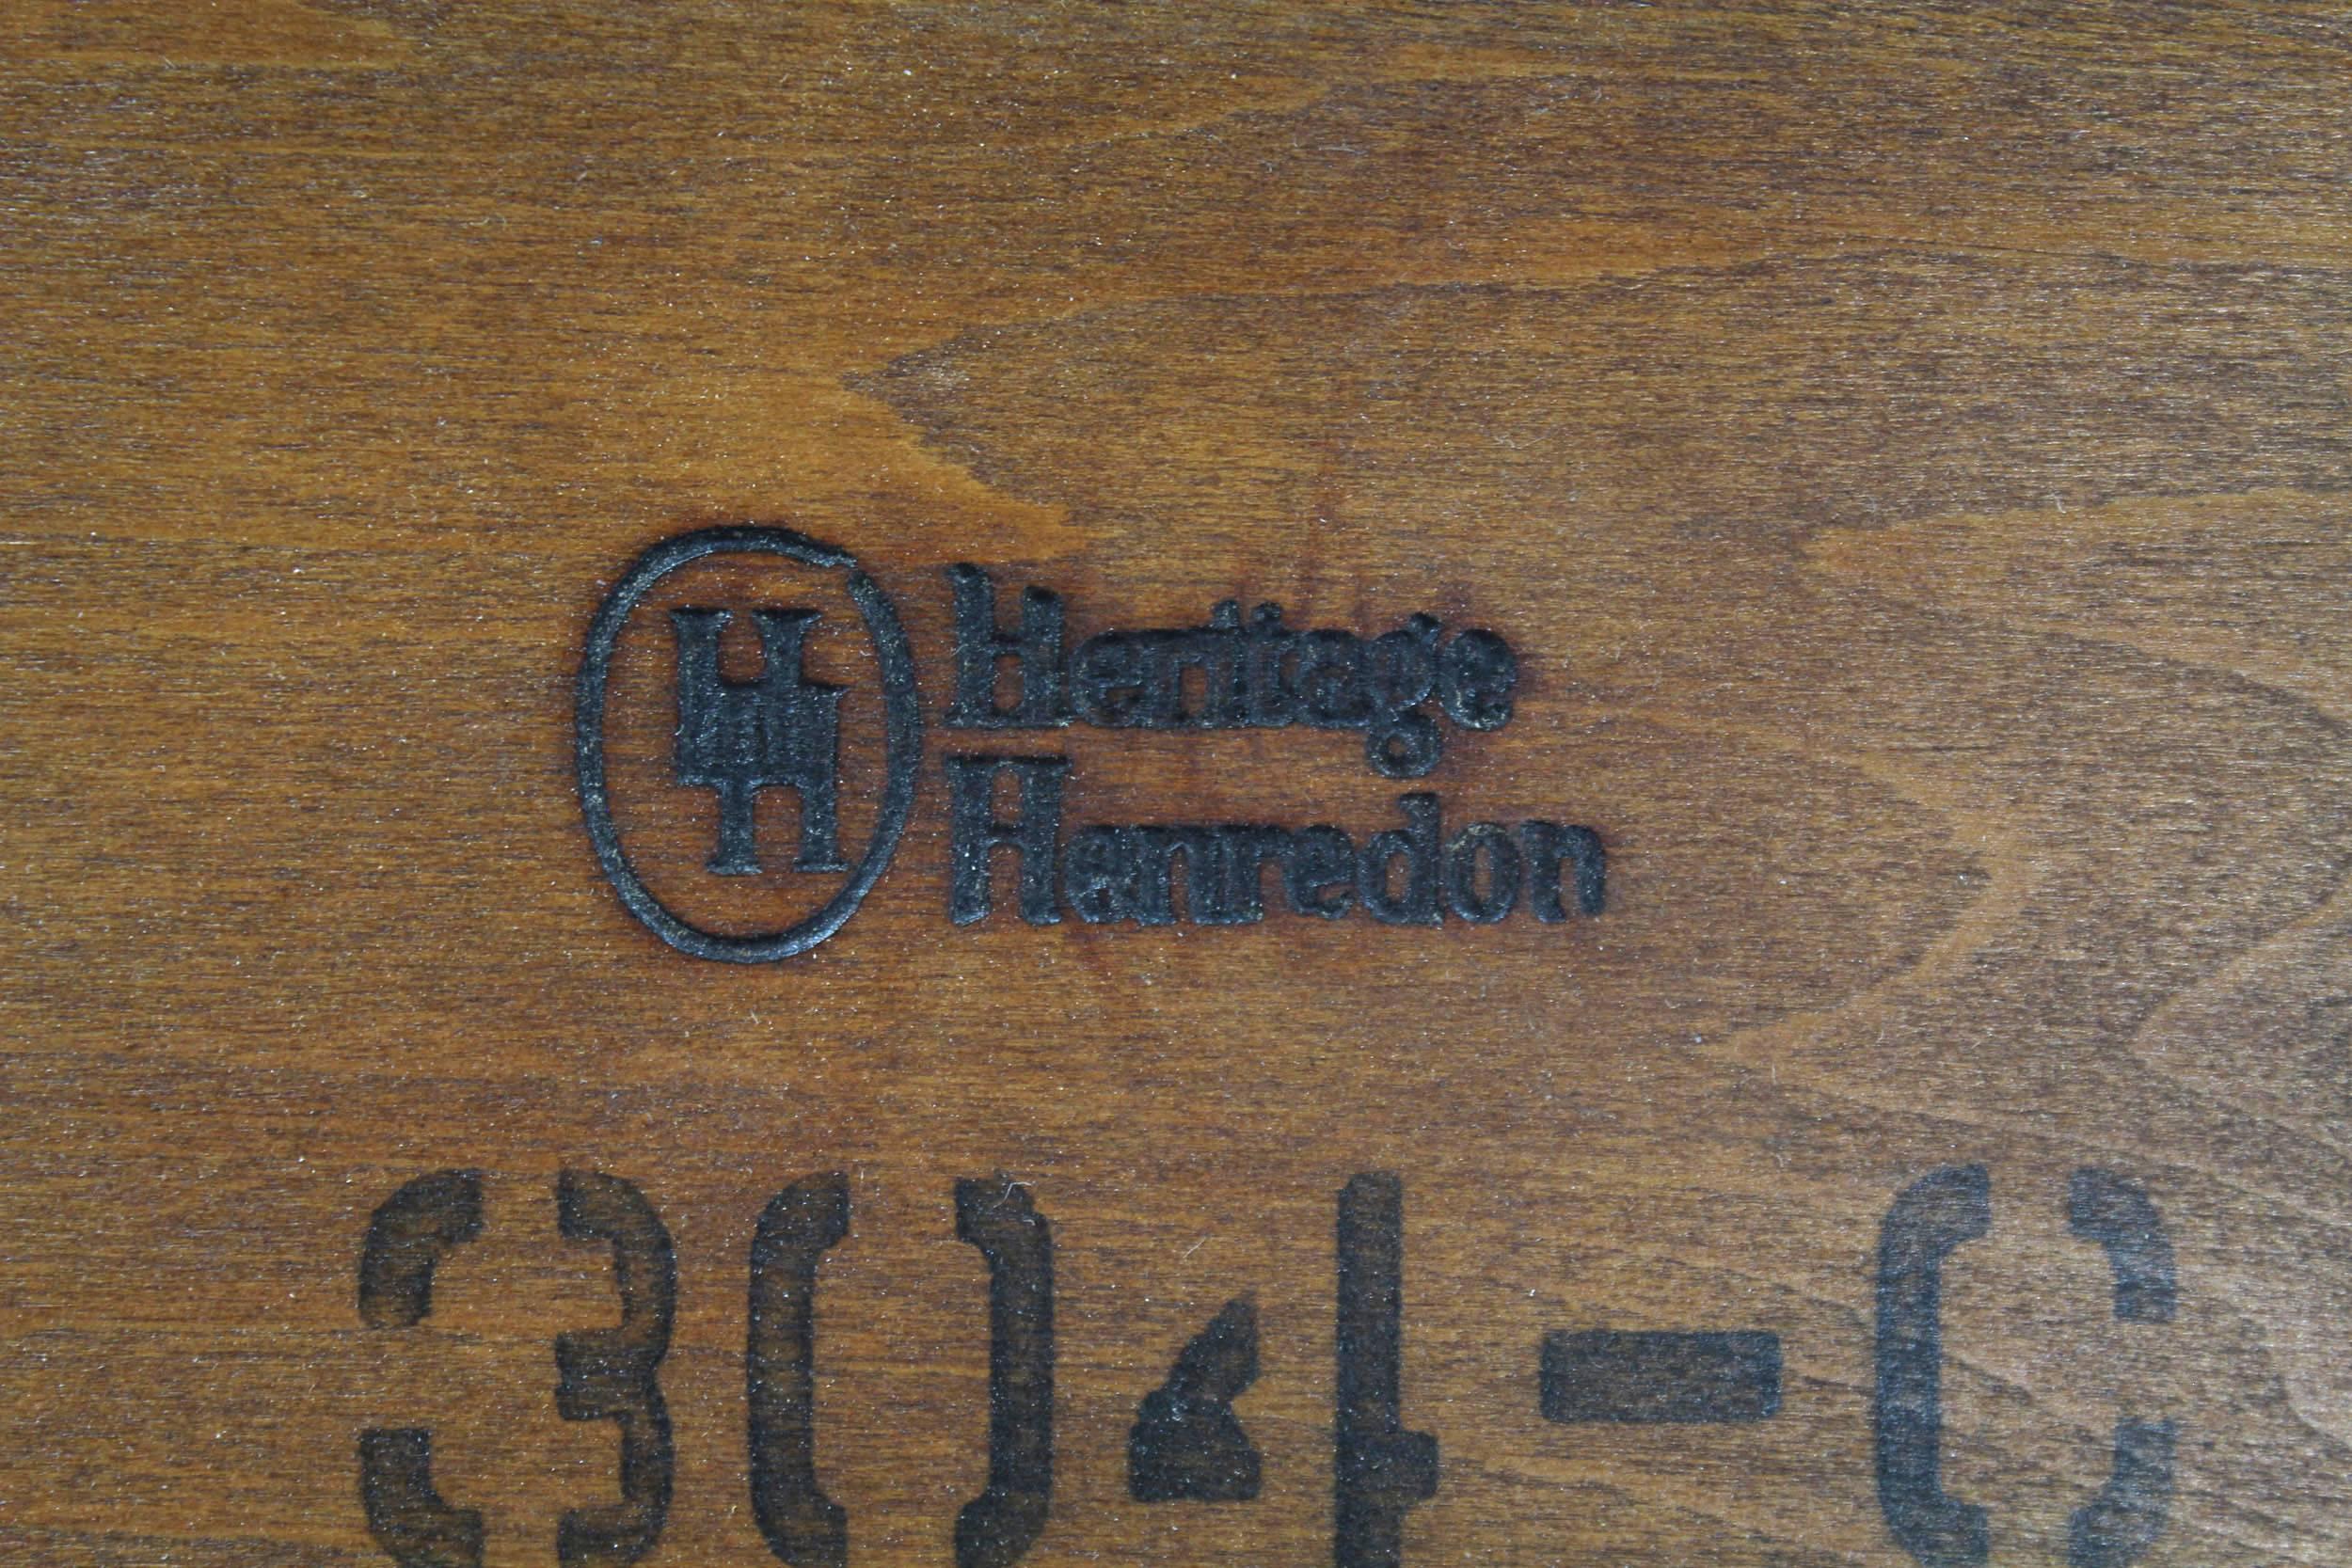 Mid century modern coffee table by Henredon.